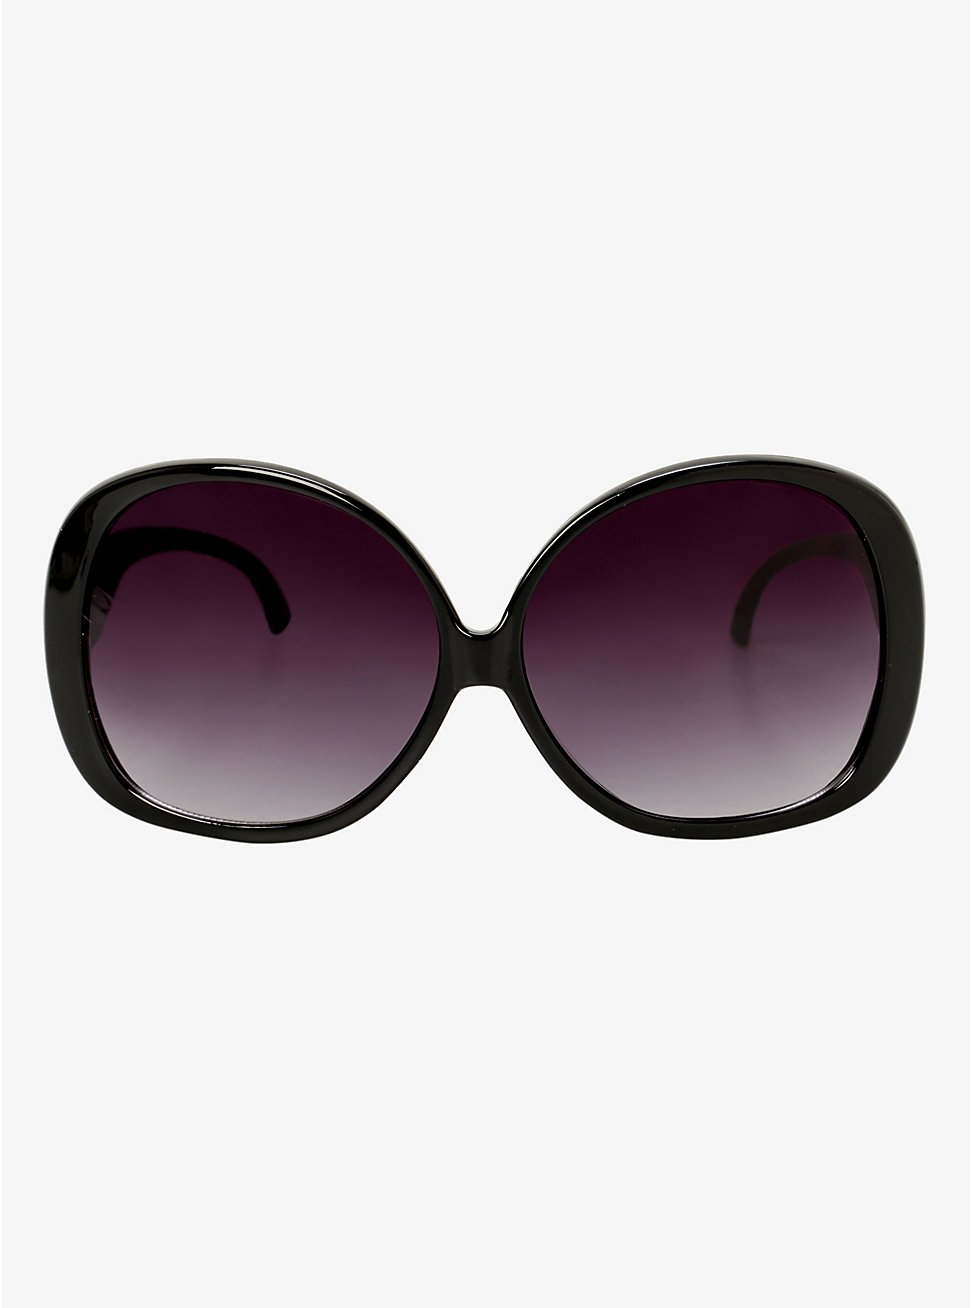 Black Rounded Square Sunglasses, , hi-res